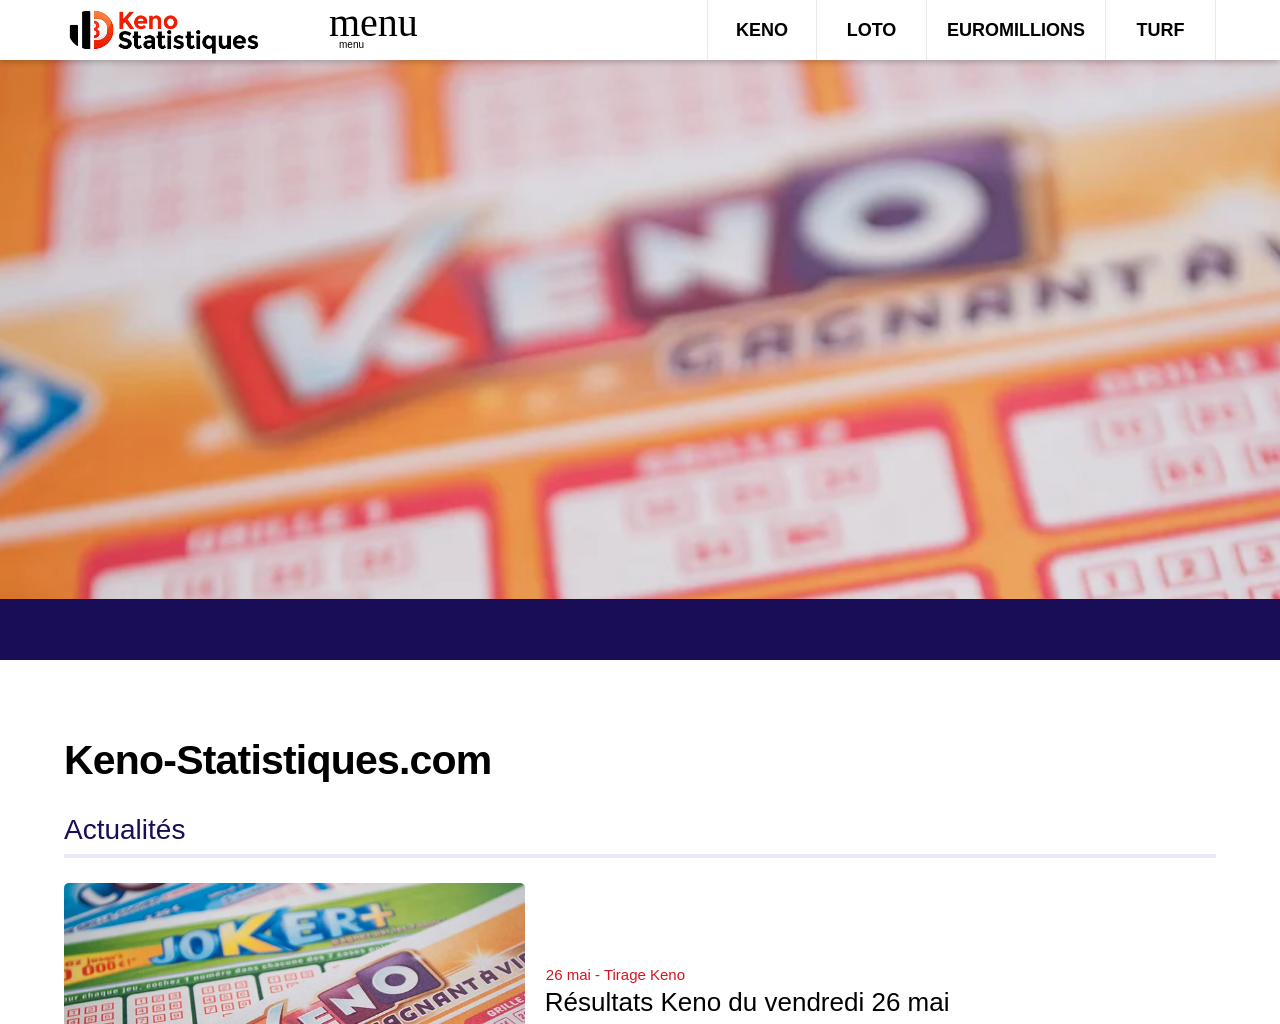 www.keno-statistiques.com